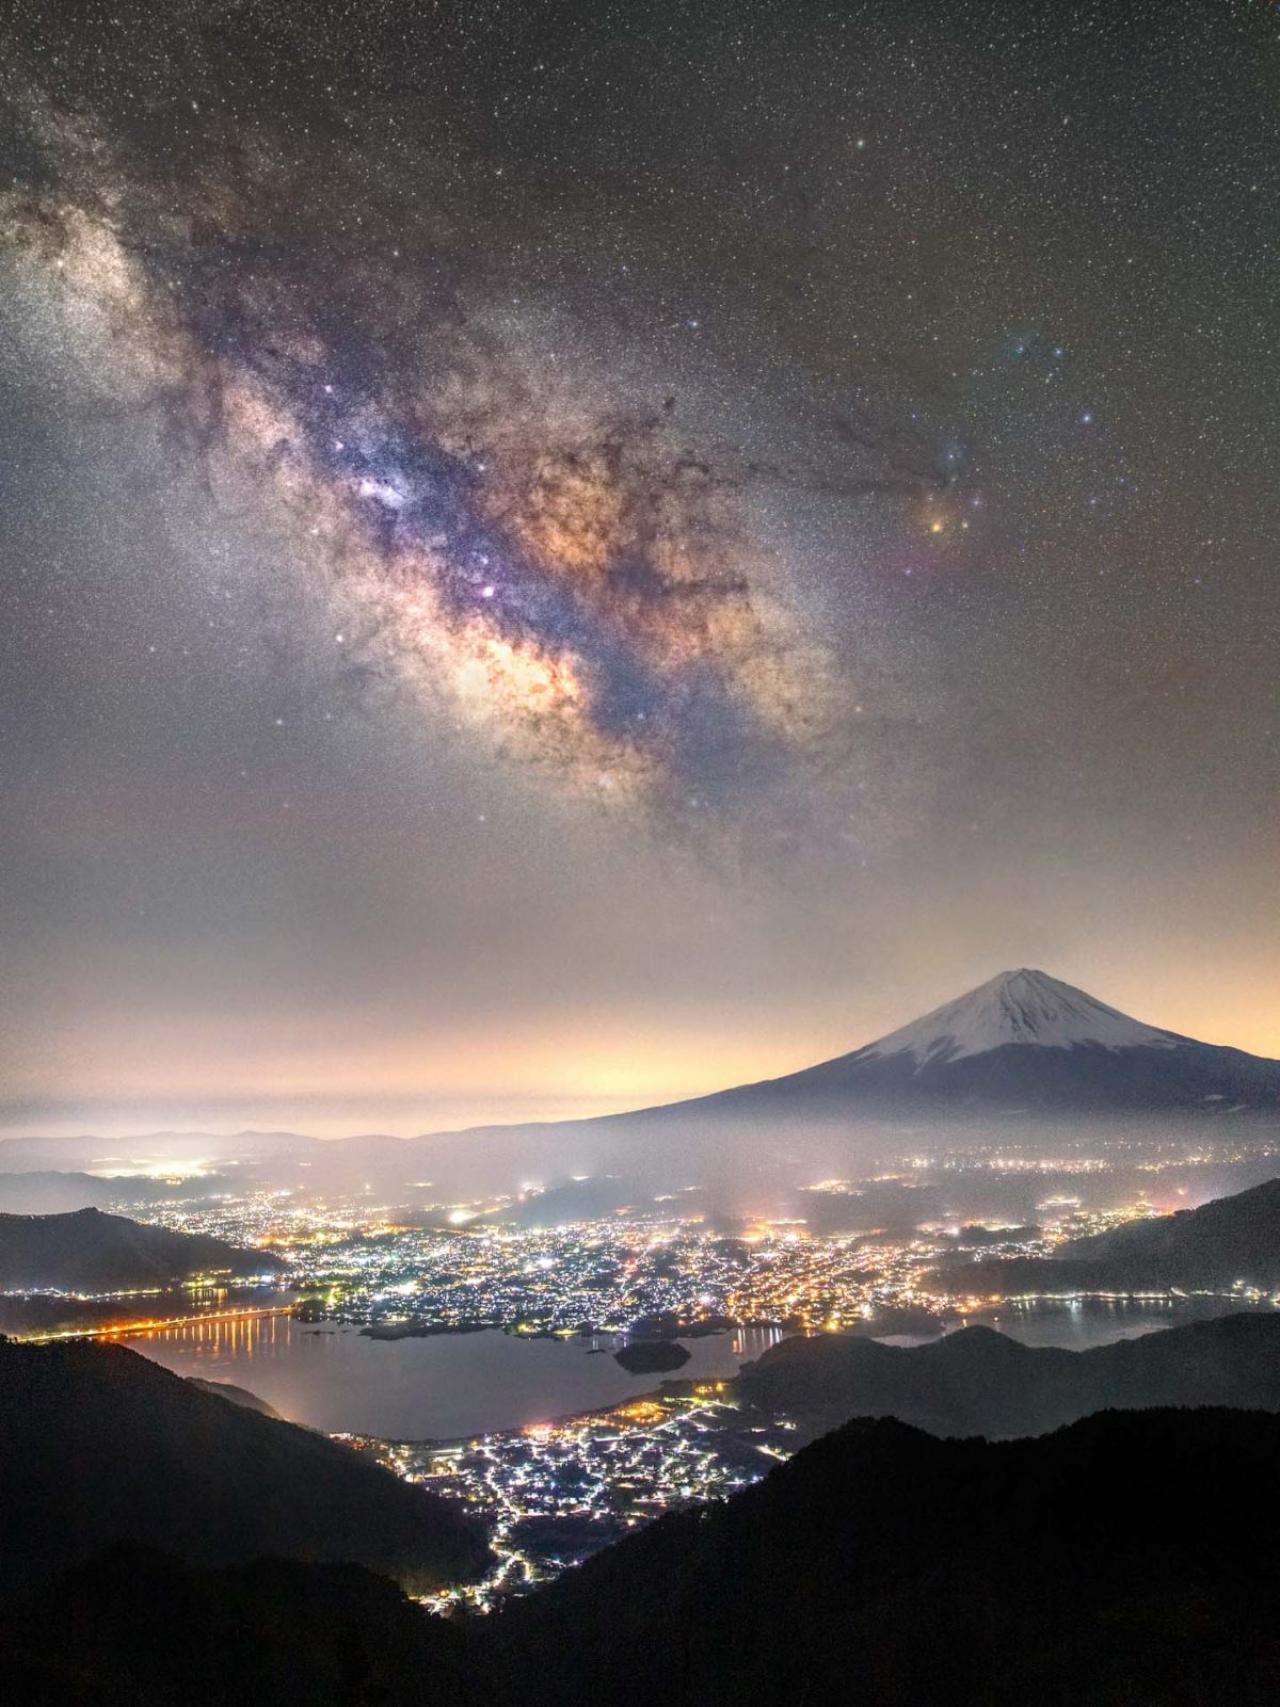 'Mount Fuji and the Milky Way over Lake Kawaguchi' gemaakt in Yamanashi in Japan door Takemochi Yuki.